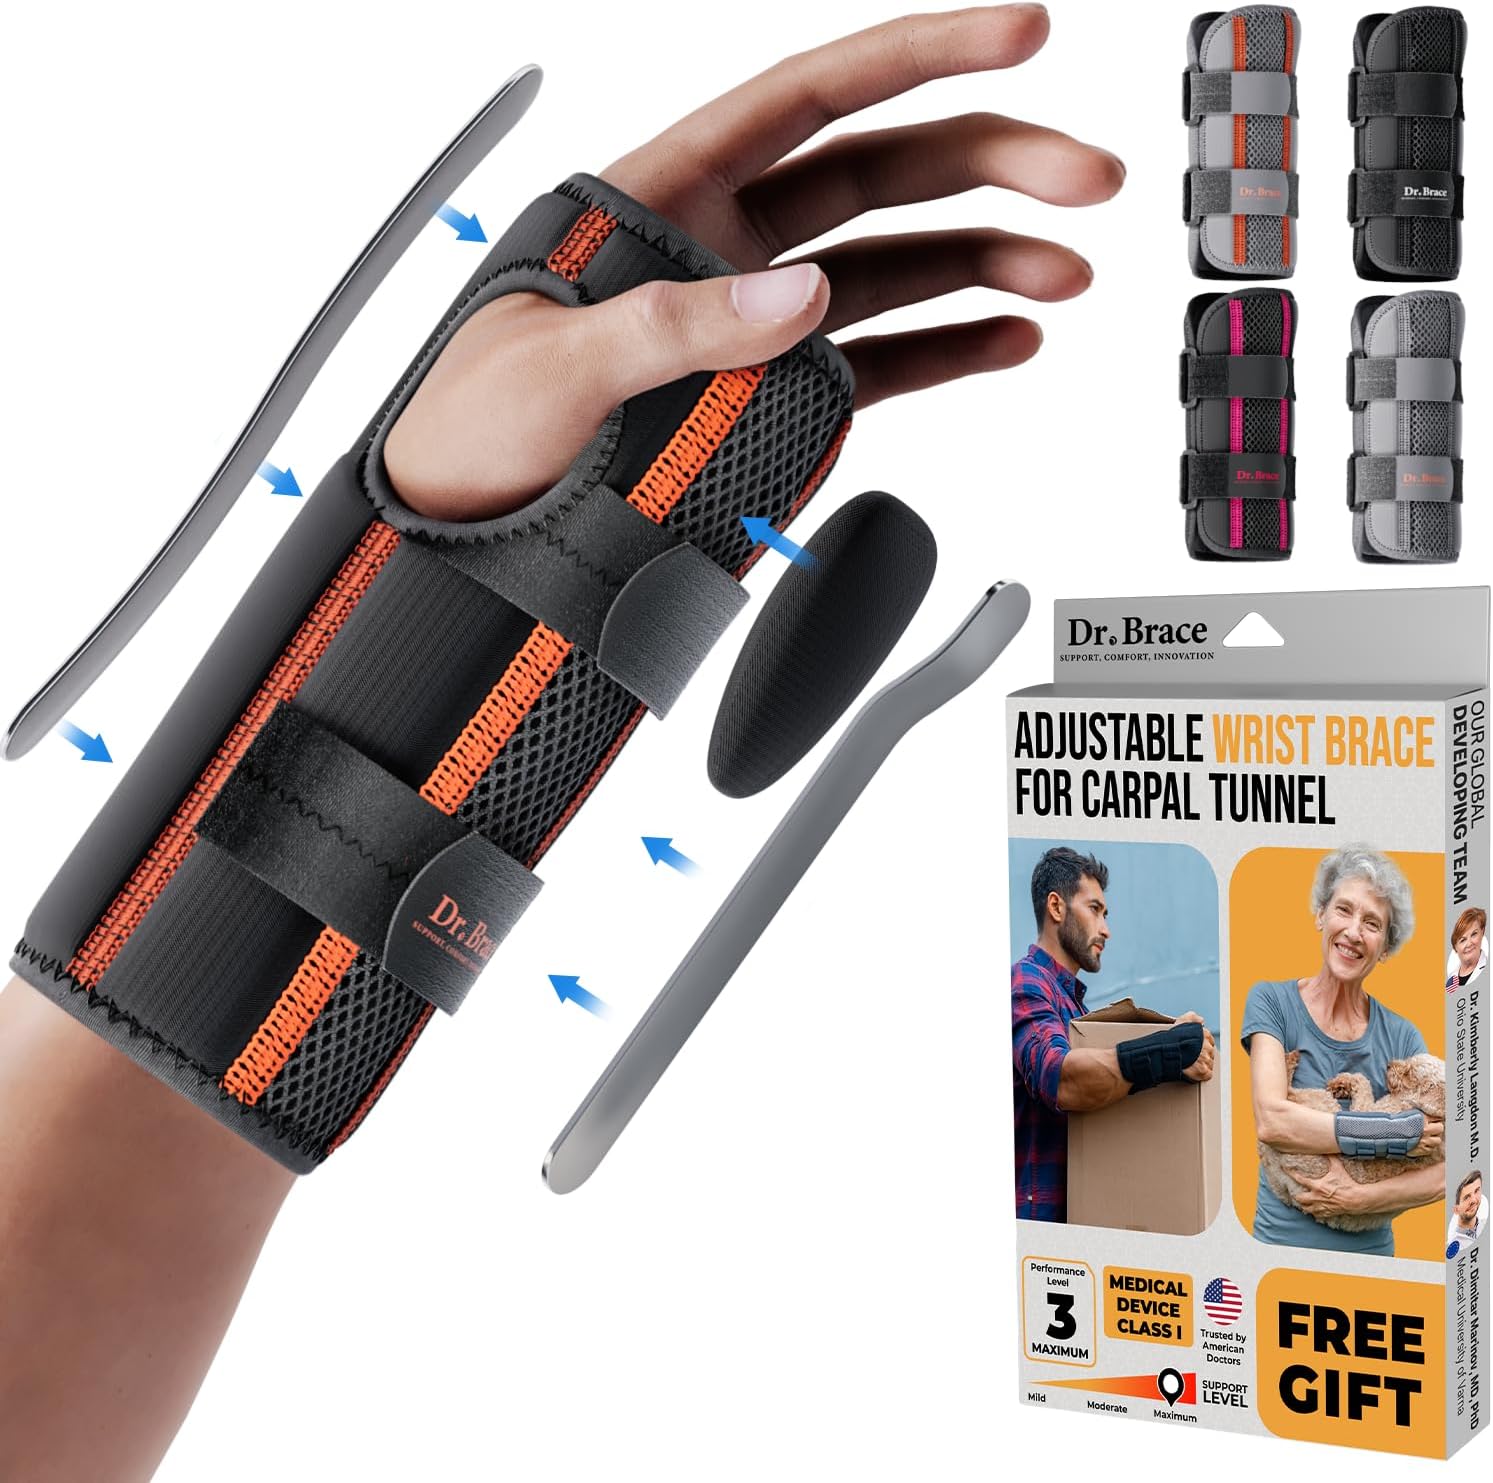 DR. BRACE Adjustable Wrist Brace Night Support Review